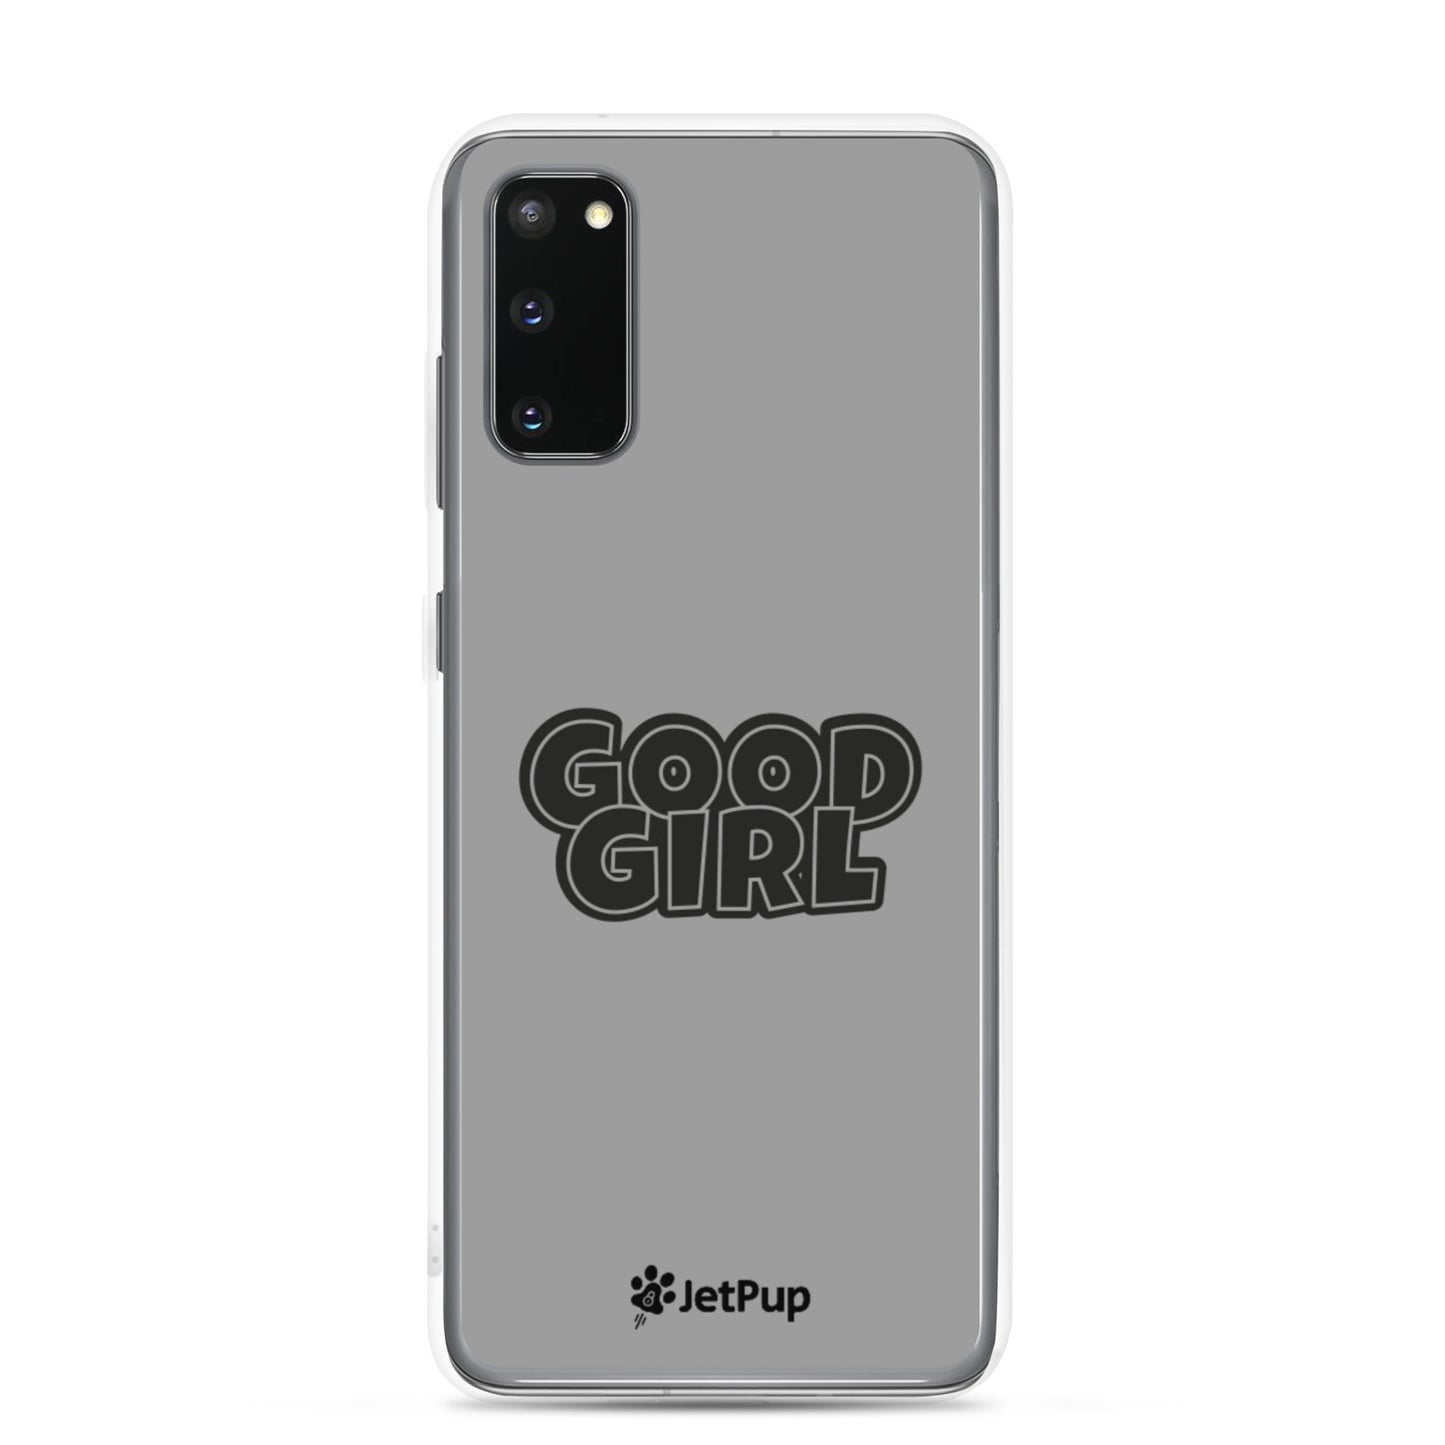 Good Girl Samsung Case - Grey - JetPup